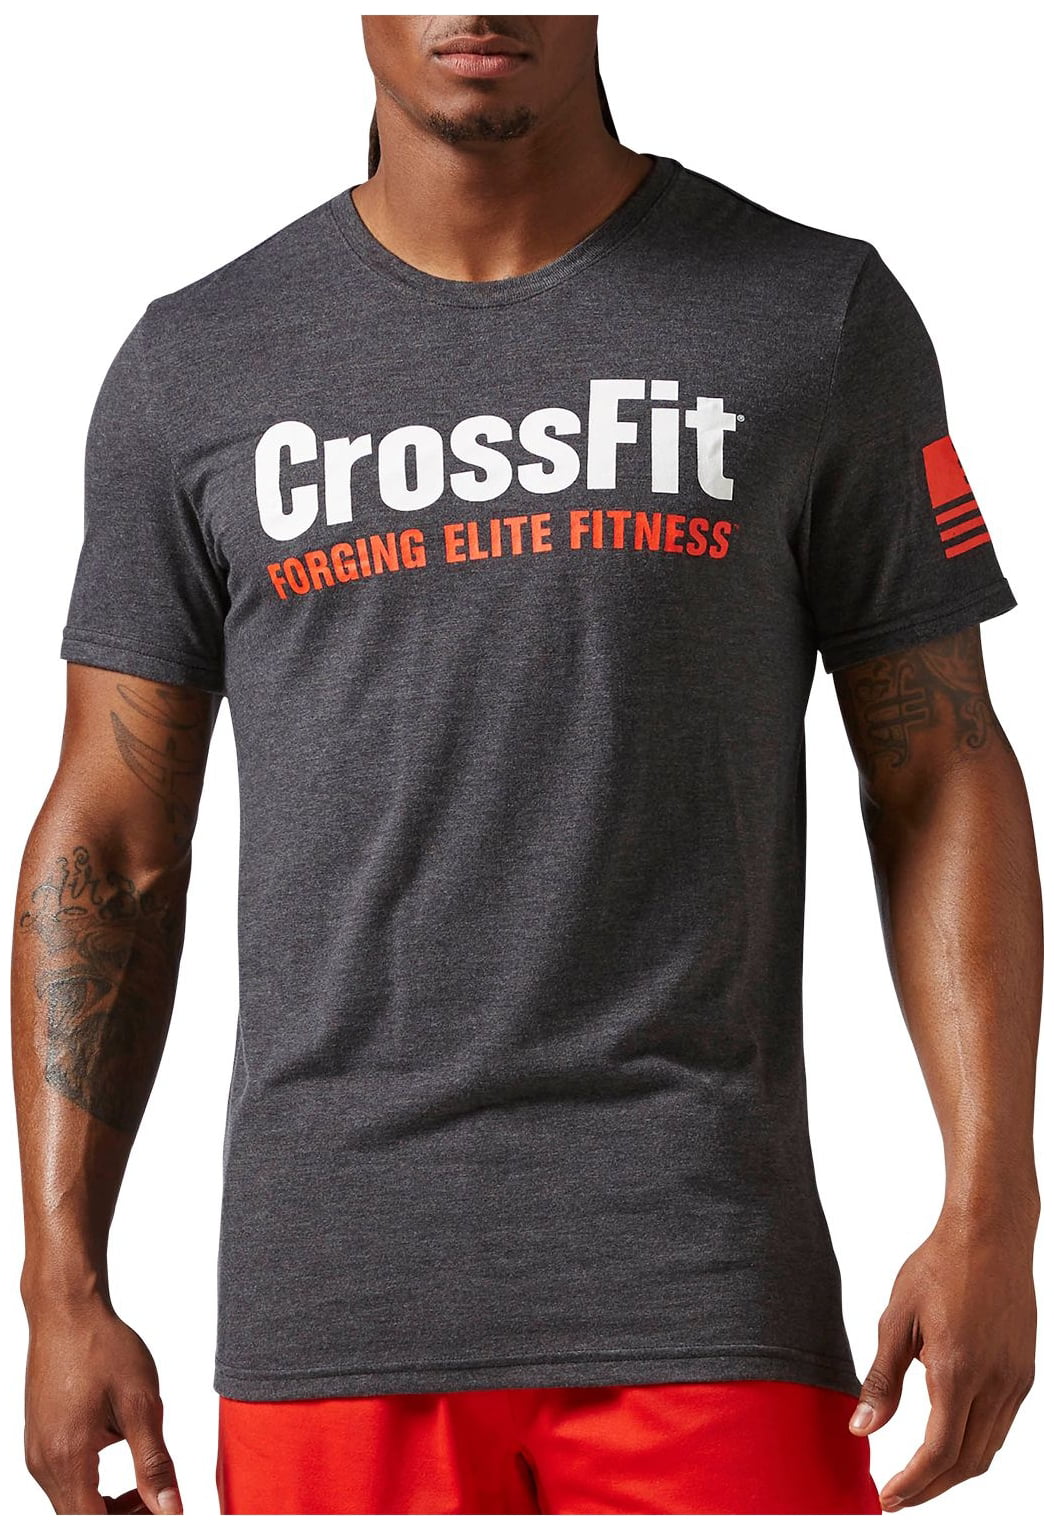 crossfit forging elite fitness shirt